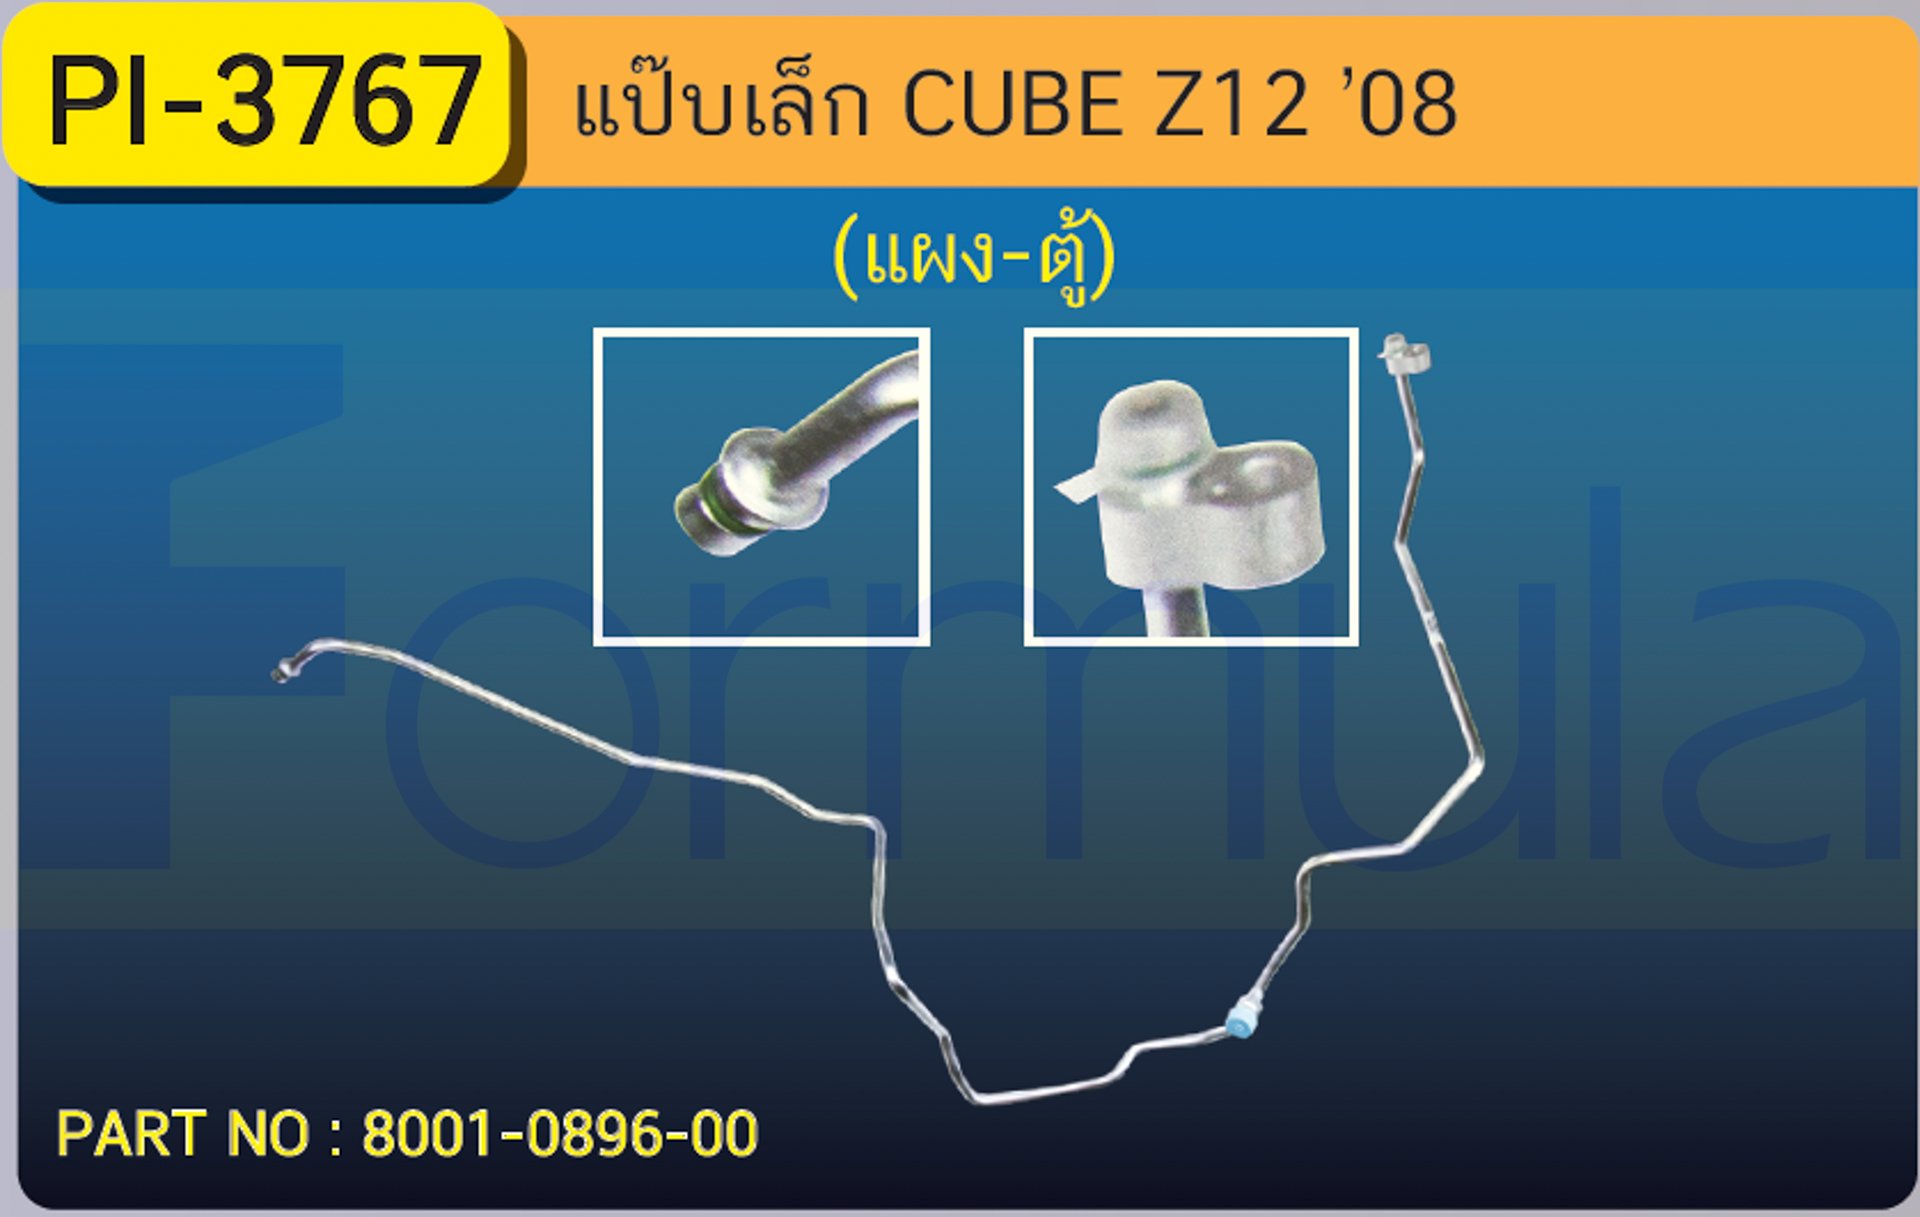 ALU. PIPE 8.0mm. NISSAN CUBE Z12 '08 (แผง-ตู้)